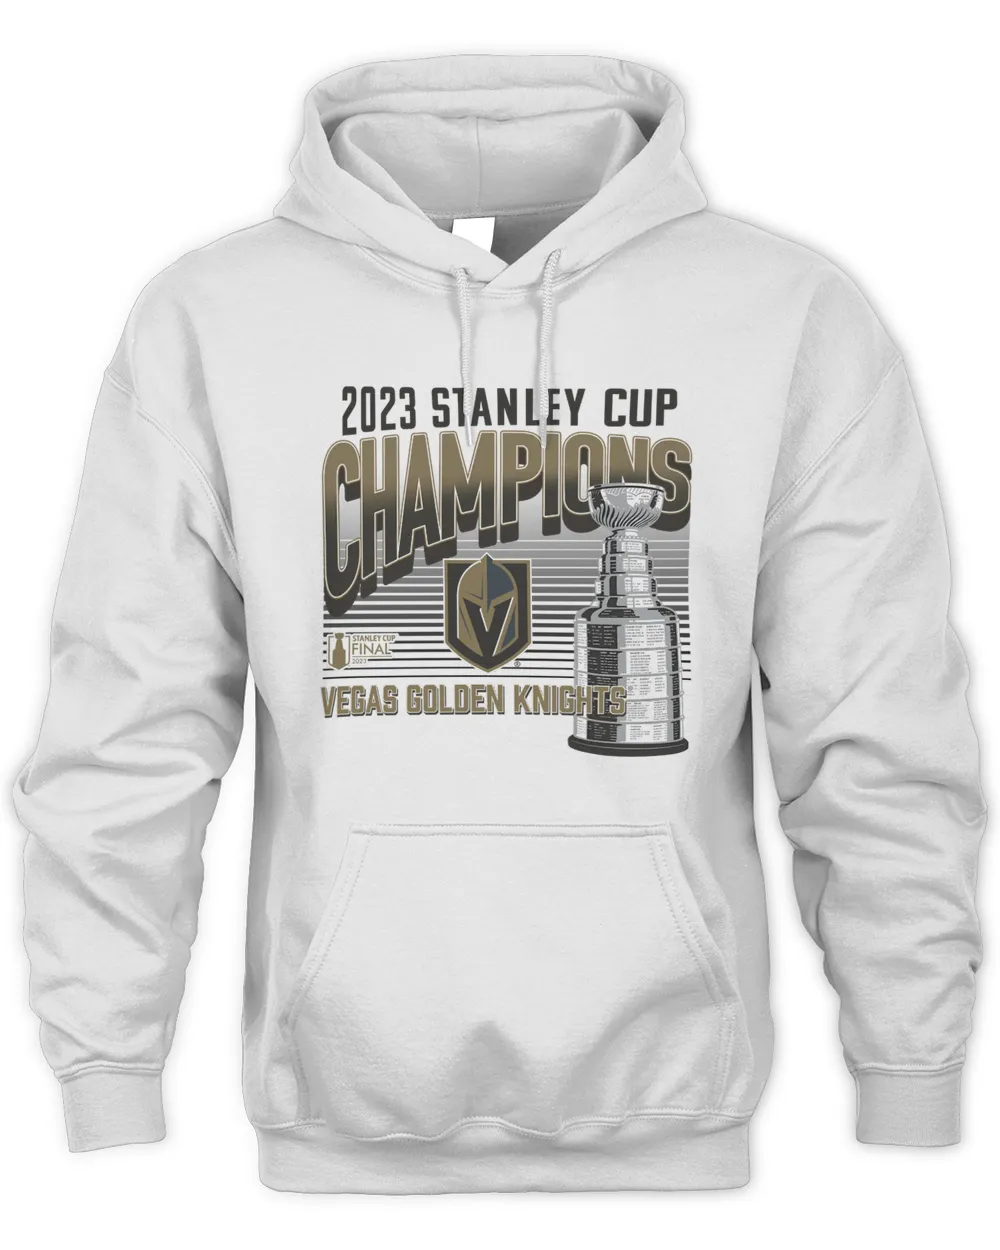 Women's Fanatics Branded White Vegas Golden Knights 2023 Stanley